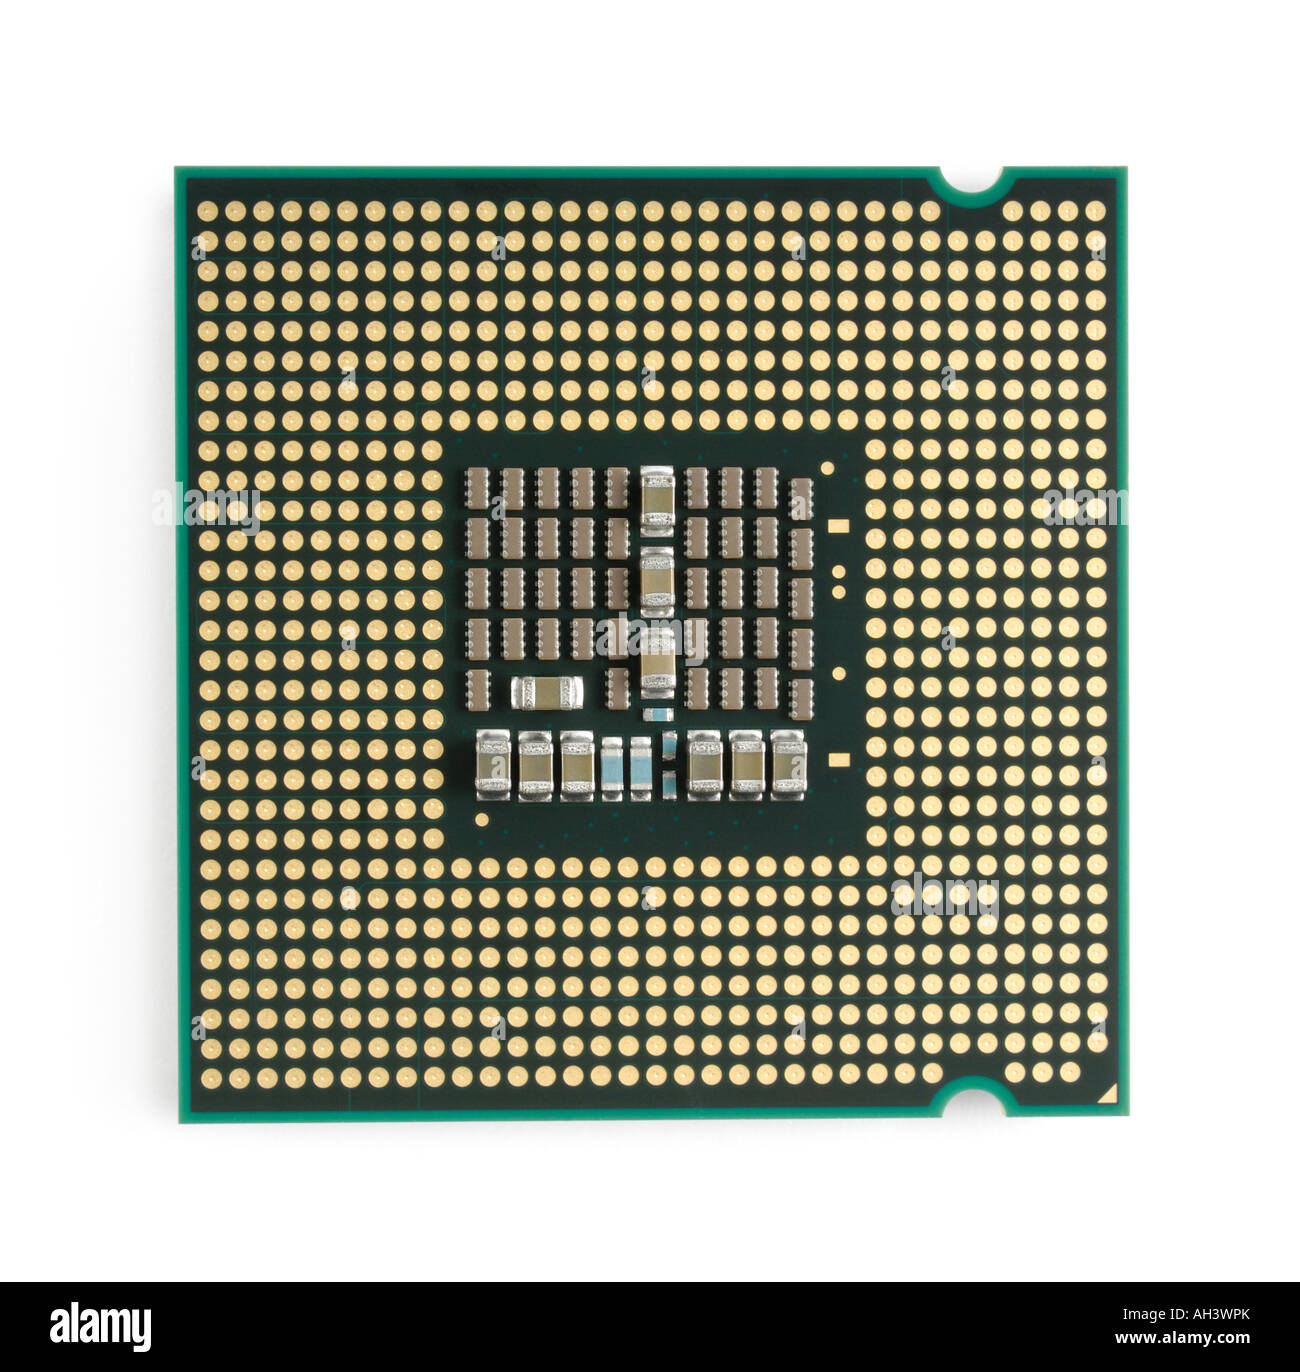 Processeur Intel Core 2 Quad Q6600 Quad core CPU Processeur LGA775 Gros  plan contacts Photo Stock - Alamy